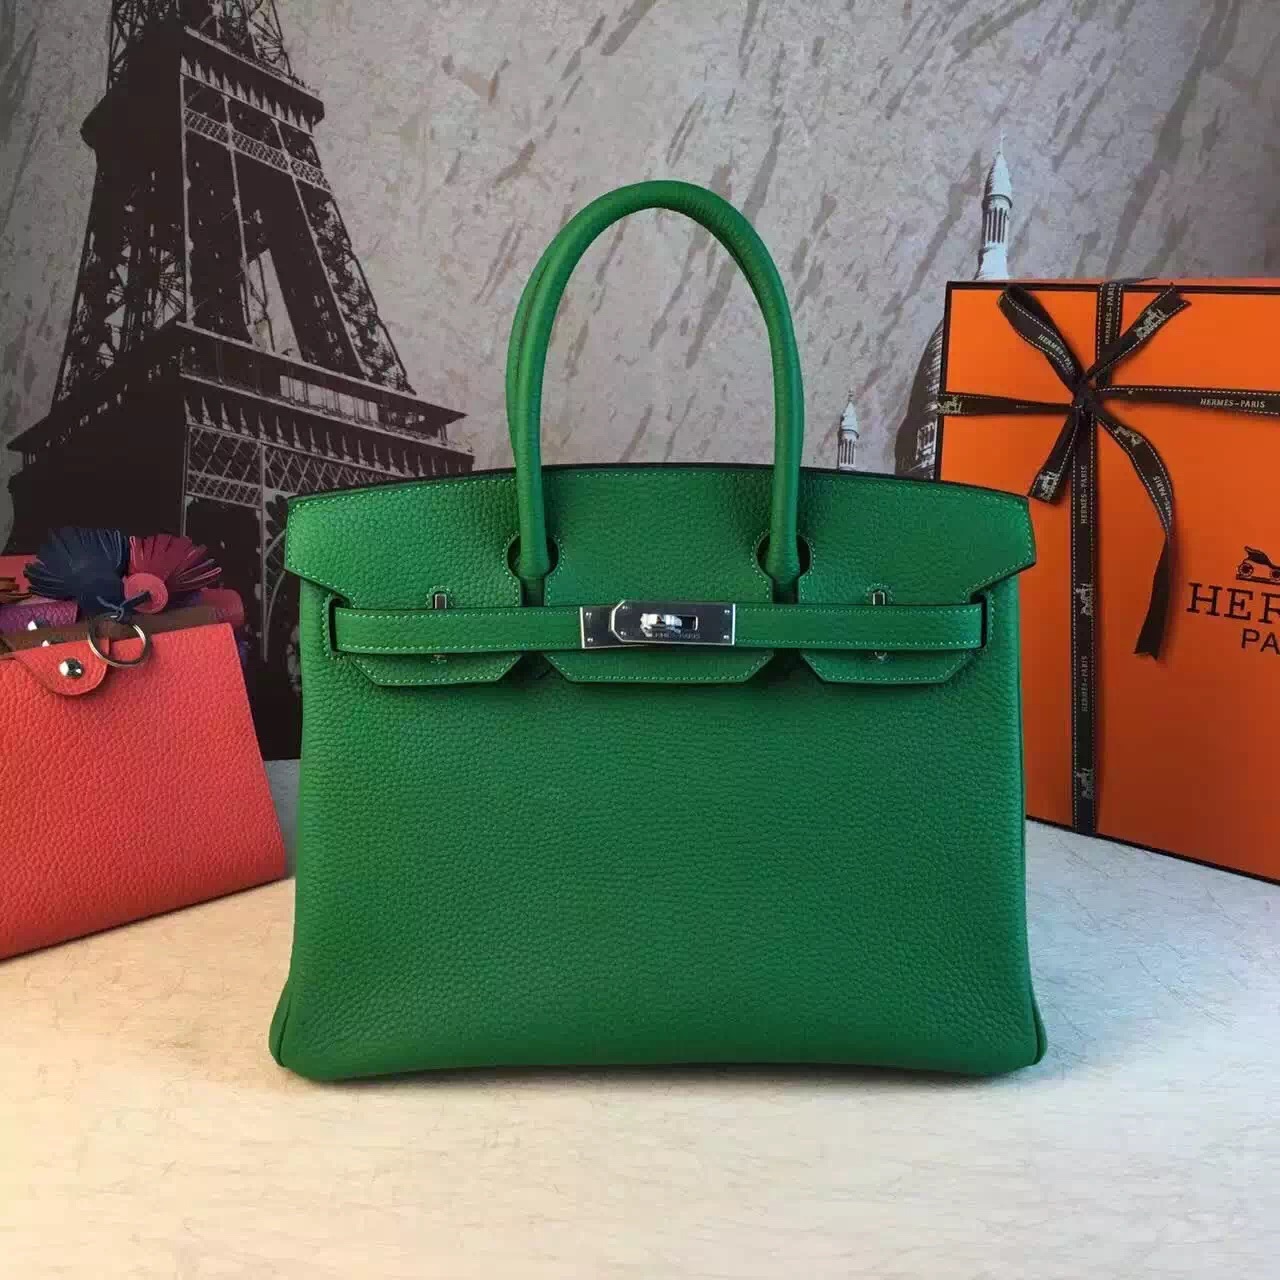 Hermes green top leather Birkin handbags